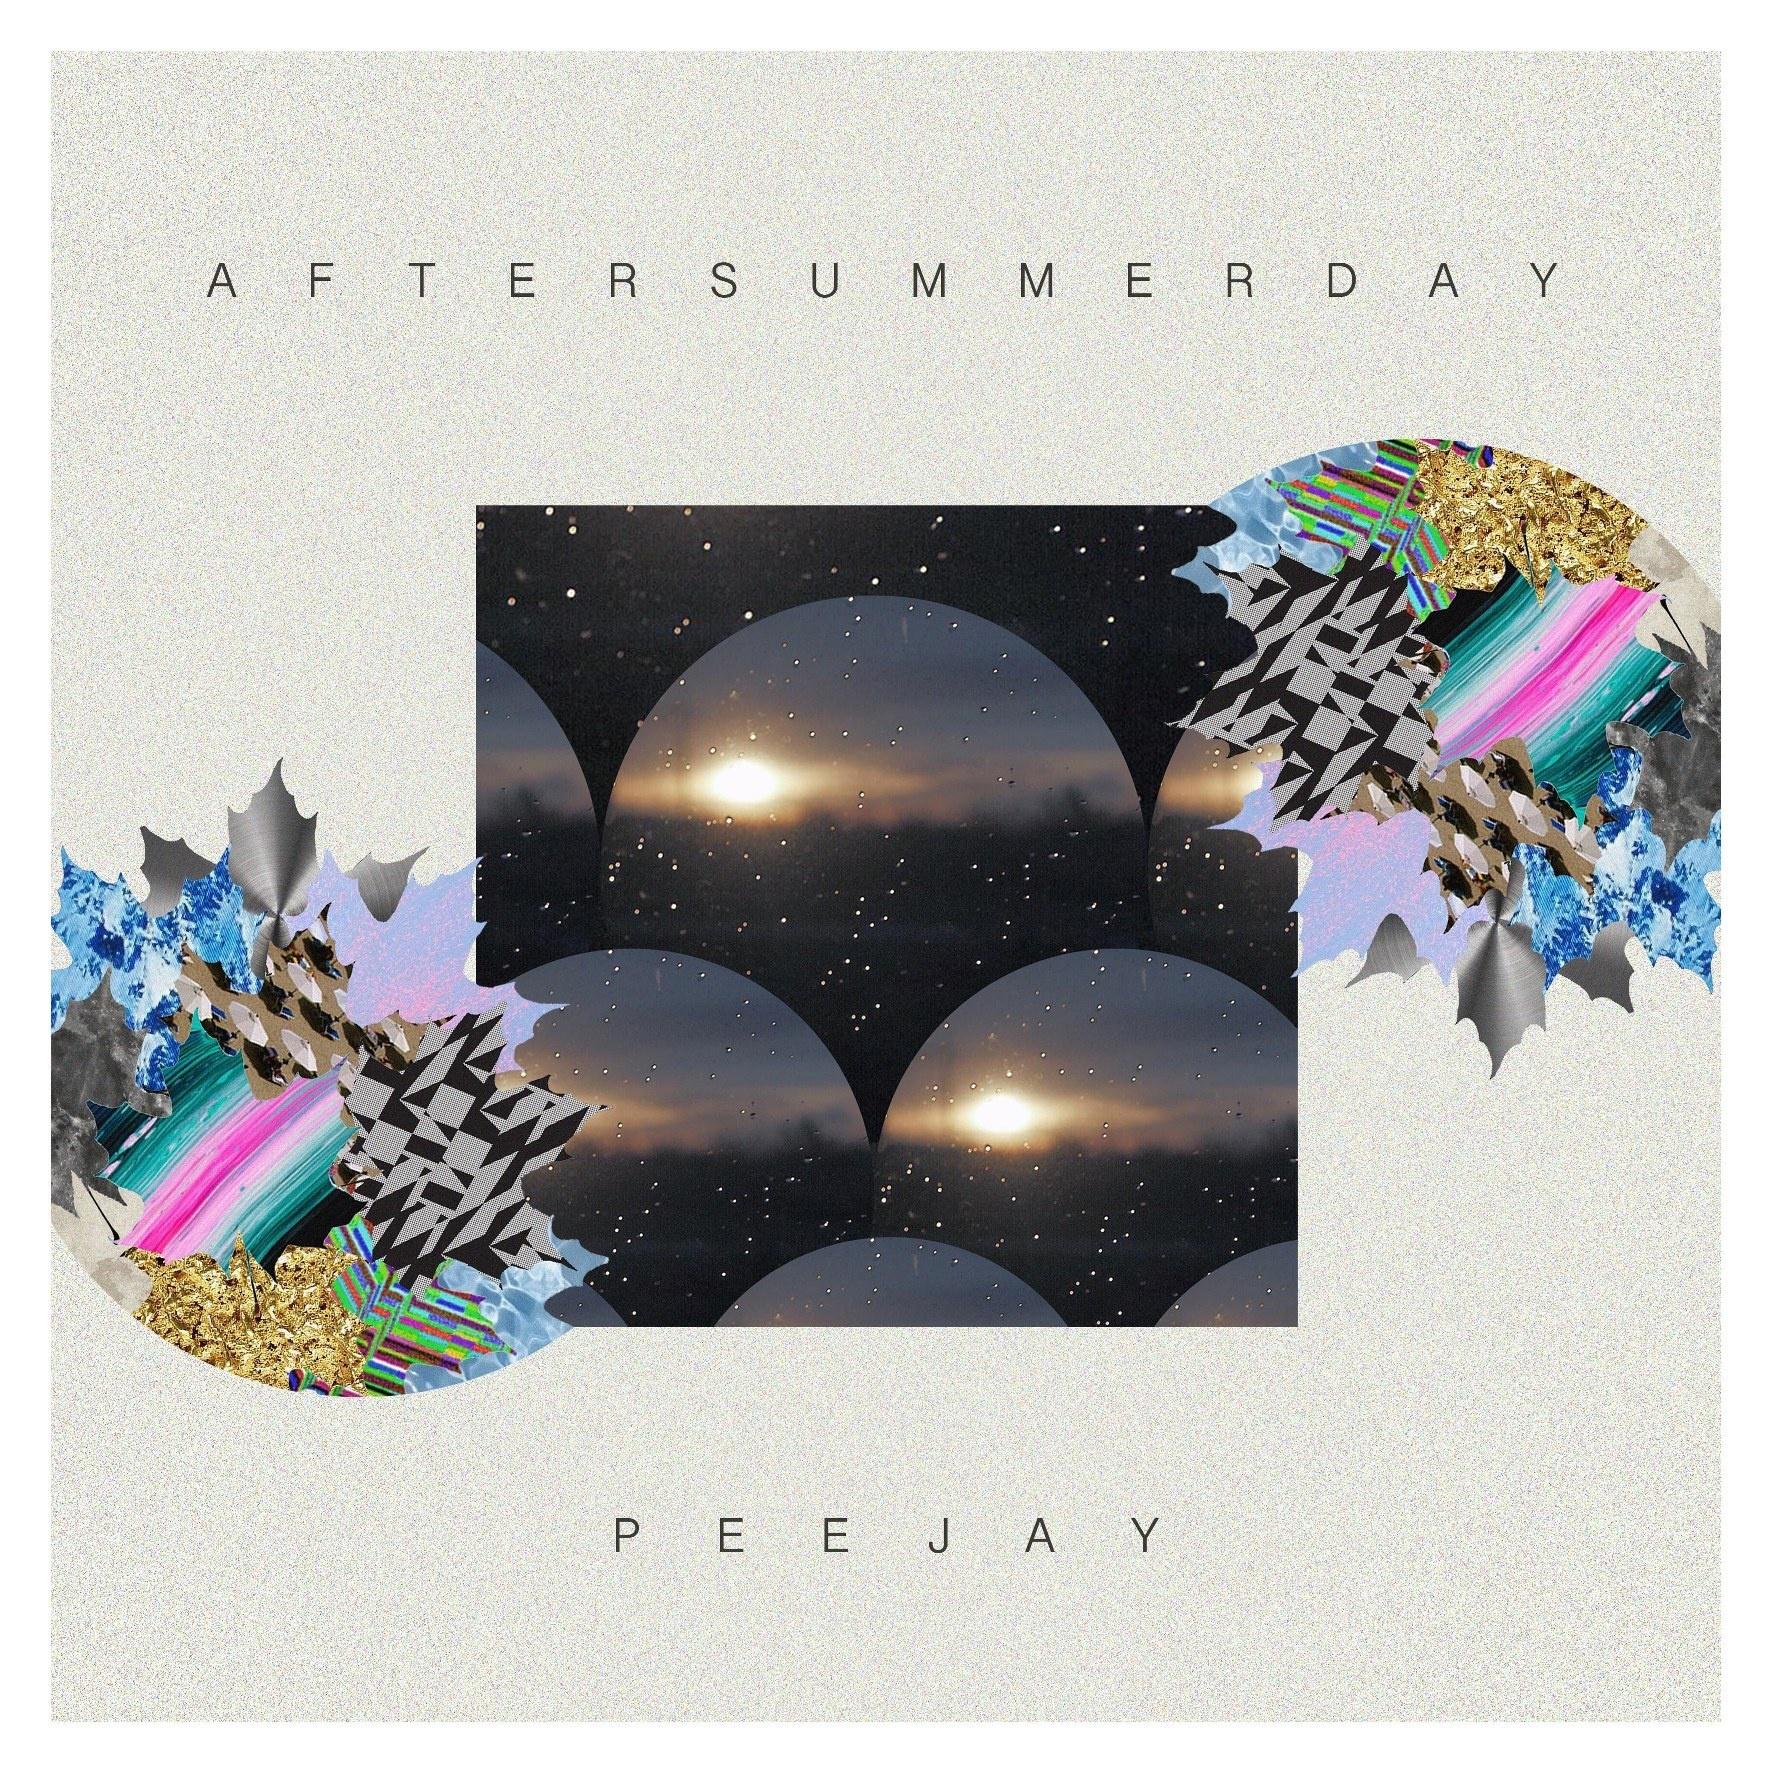 PEEJAY - After Summerday